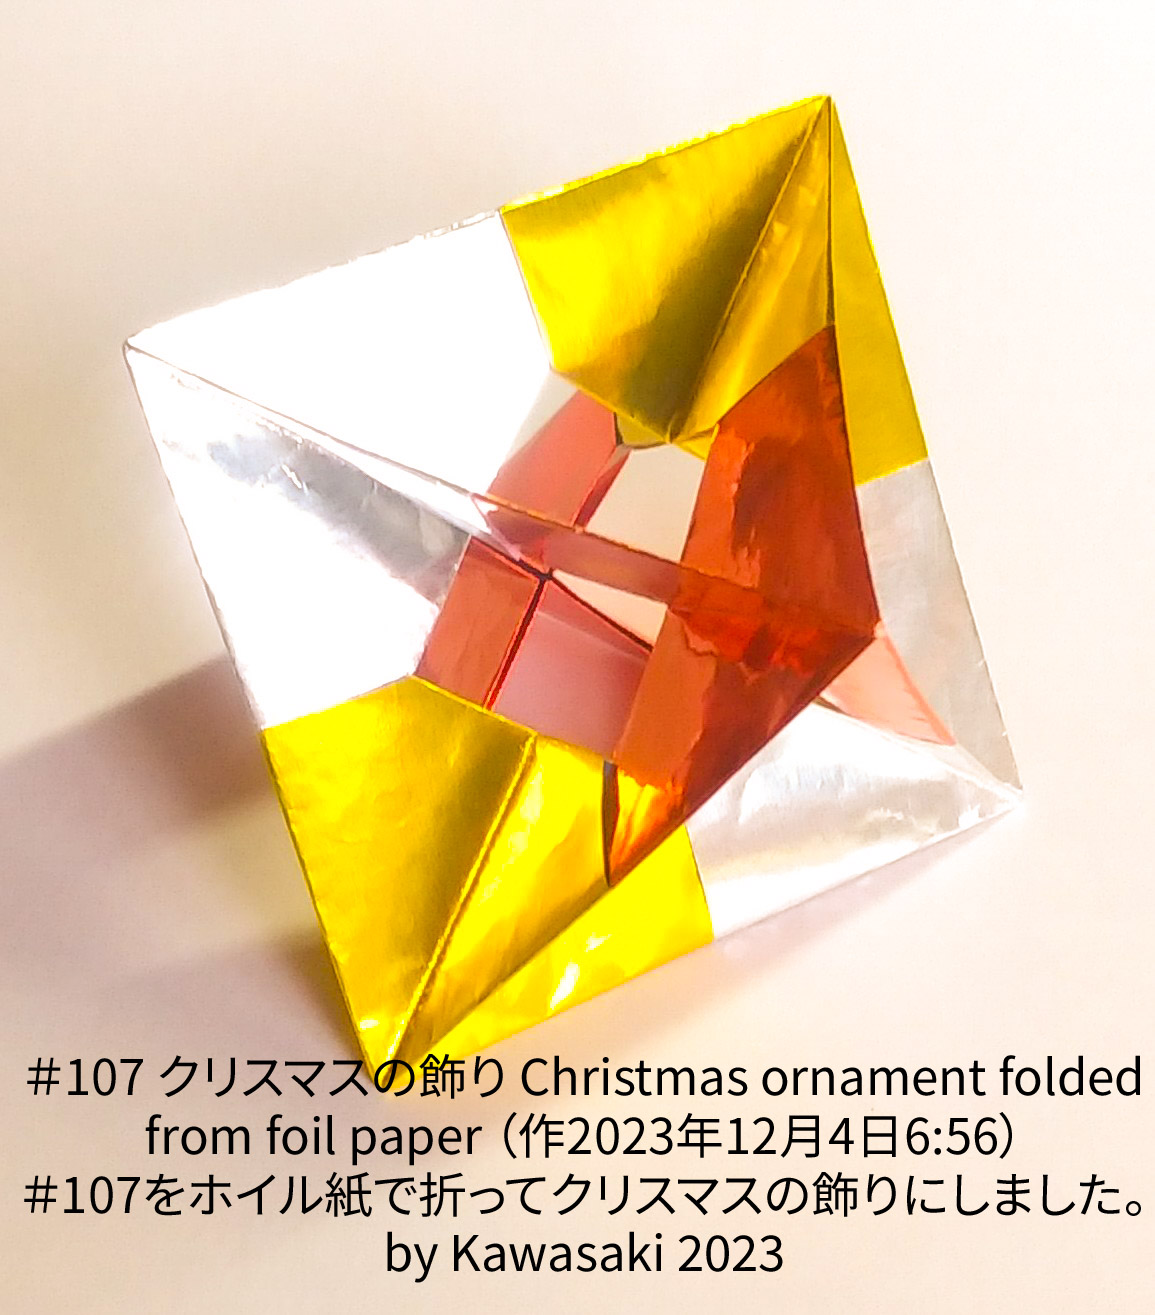 2023/12/07(Thu) 12:22「＃107 クリスマスの飾り Christmas ornament folded from foil paper （作2023年12月4日6:56） 」川崎敏和 T.Kawasaki
（創作者 Author：川崎敏和 T.Kawasaki,　製作者 Folder：川崎敏和 T.Kawasaki ,　出典 Source：2023年川崎敏和折り紙キット107）
 ＃107をホイル紙で折ってクリスマスの飾りにしました。by Kawasaki 2023